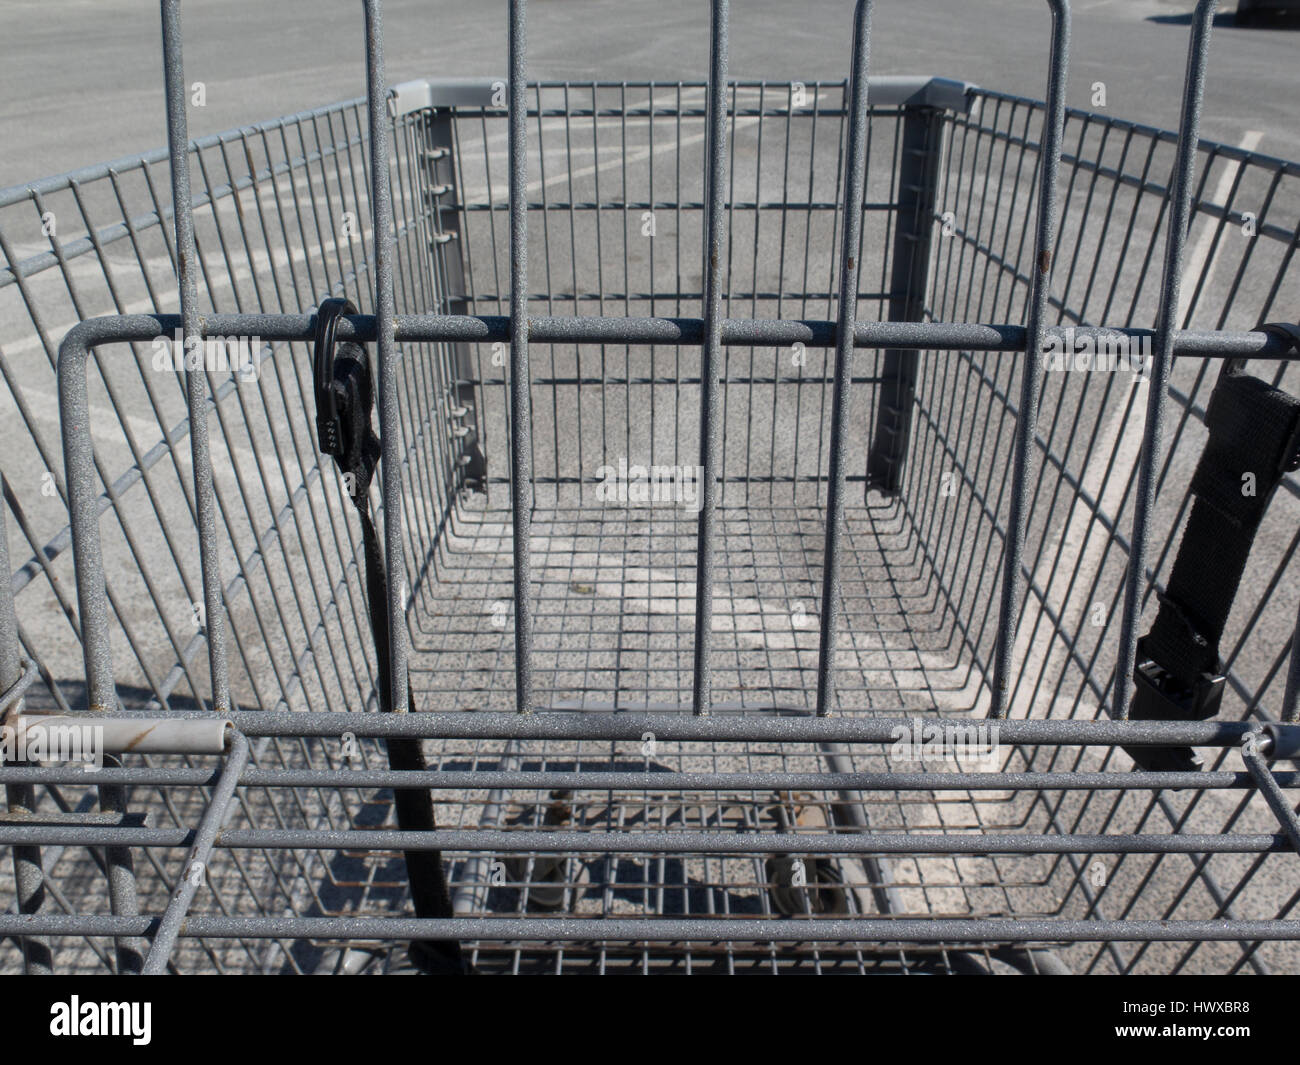 Closeup view of a shopping cart outside. Stock Photo